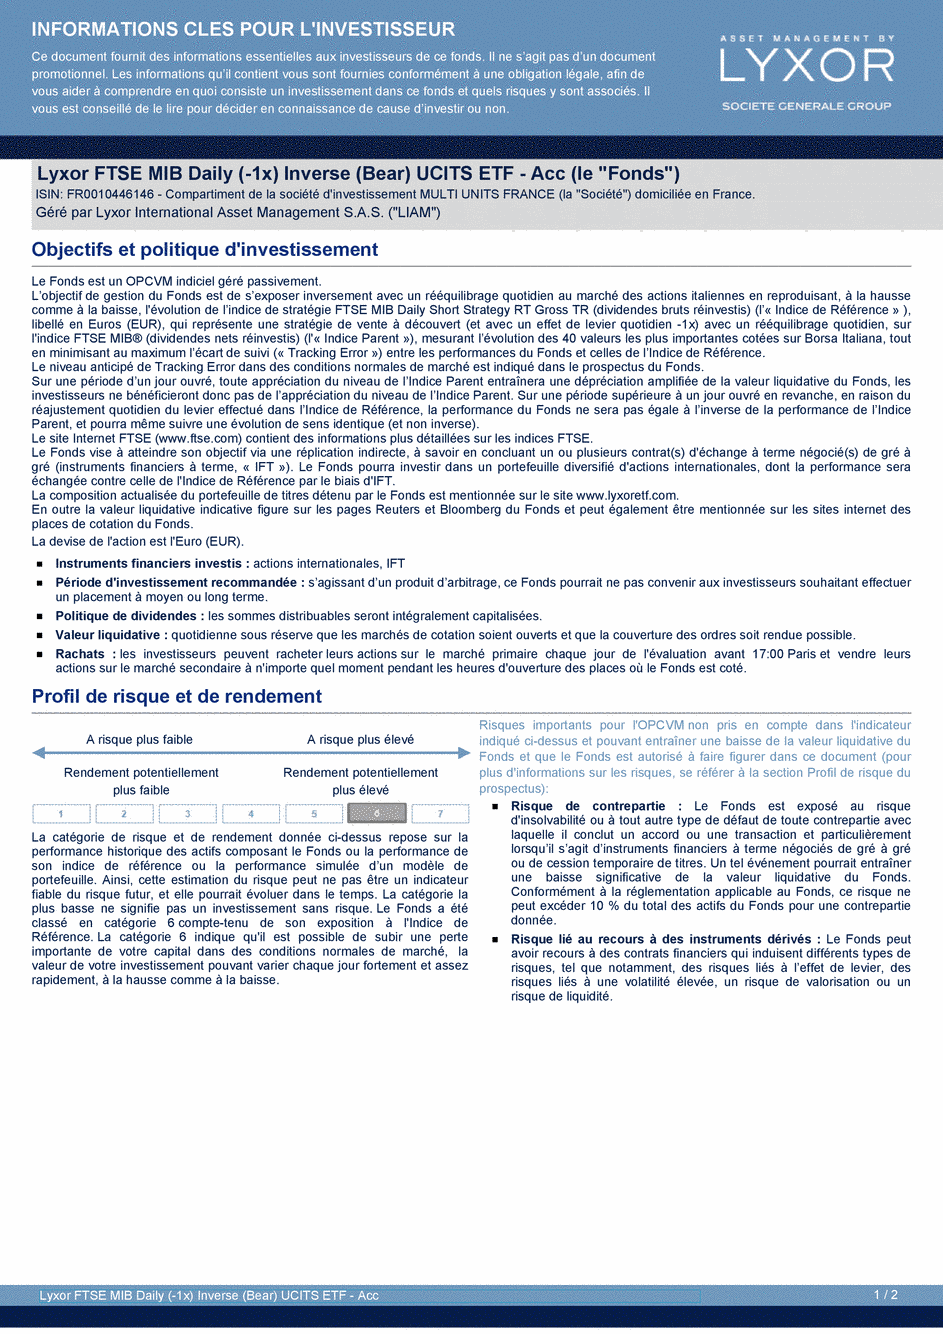 DICI Lyxor FTSE MIB Daily (-1x) Inverse (Bear) UCITS ETF - Acc - 19/02/2021 - Français